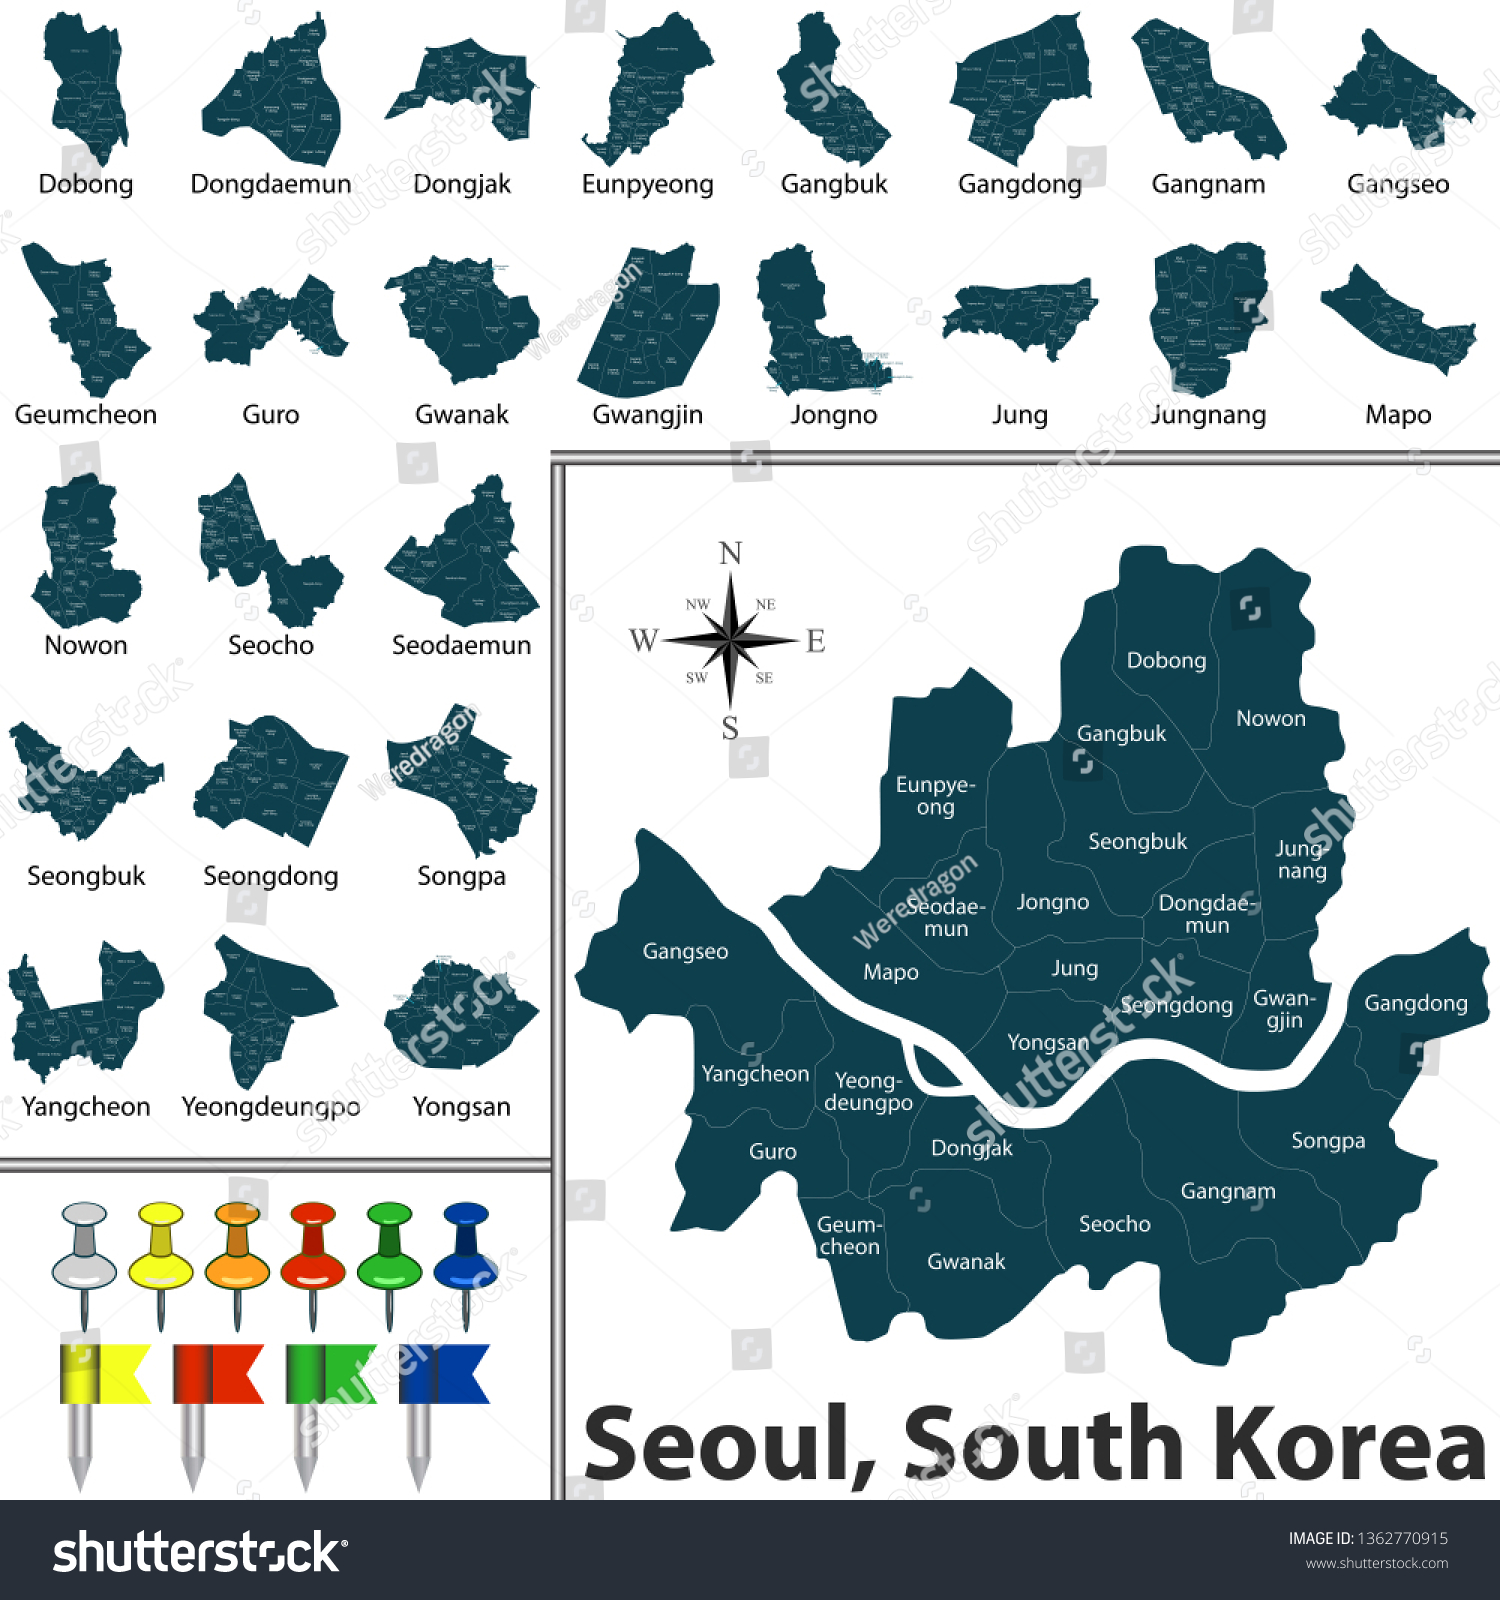 South Korea District Map Vector Map Seoul South Korea Districts Stock Vector (Royalty Free)  1362770915 | Shutterstock